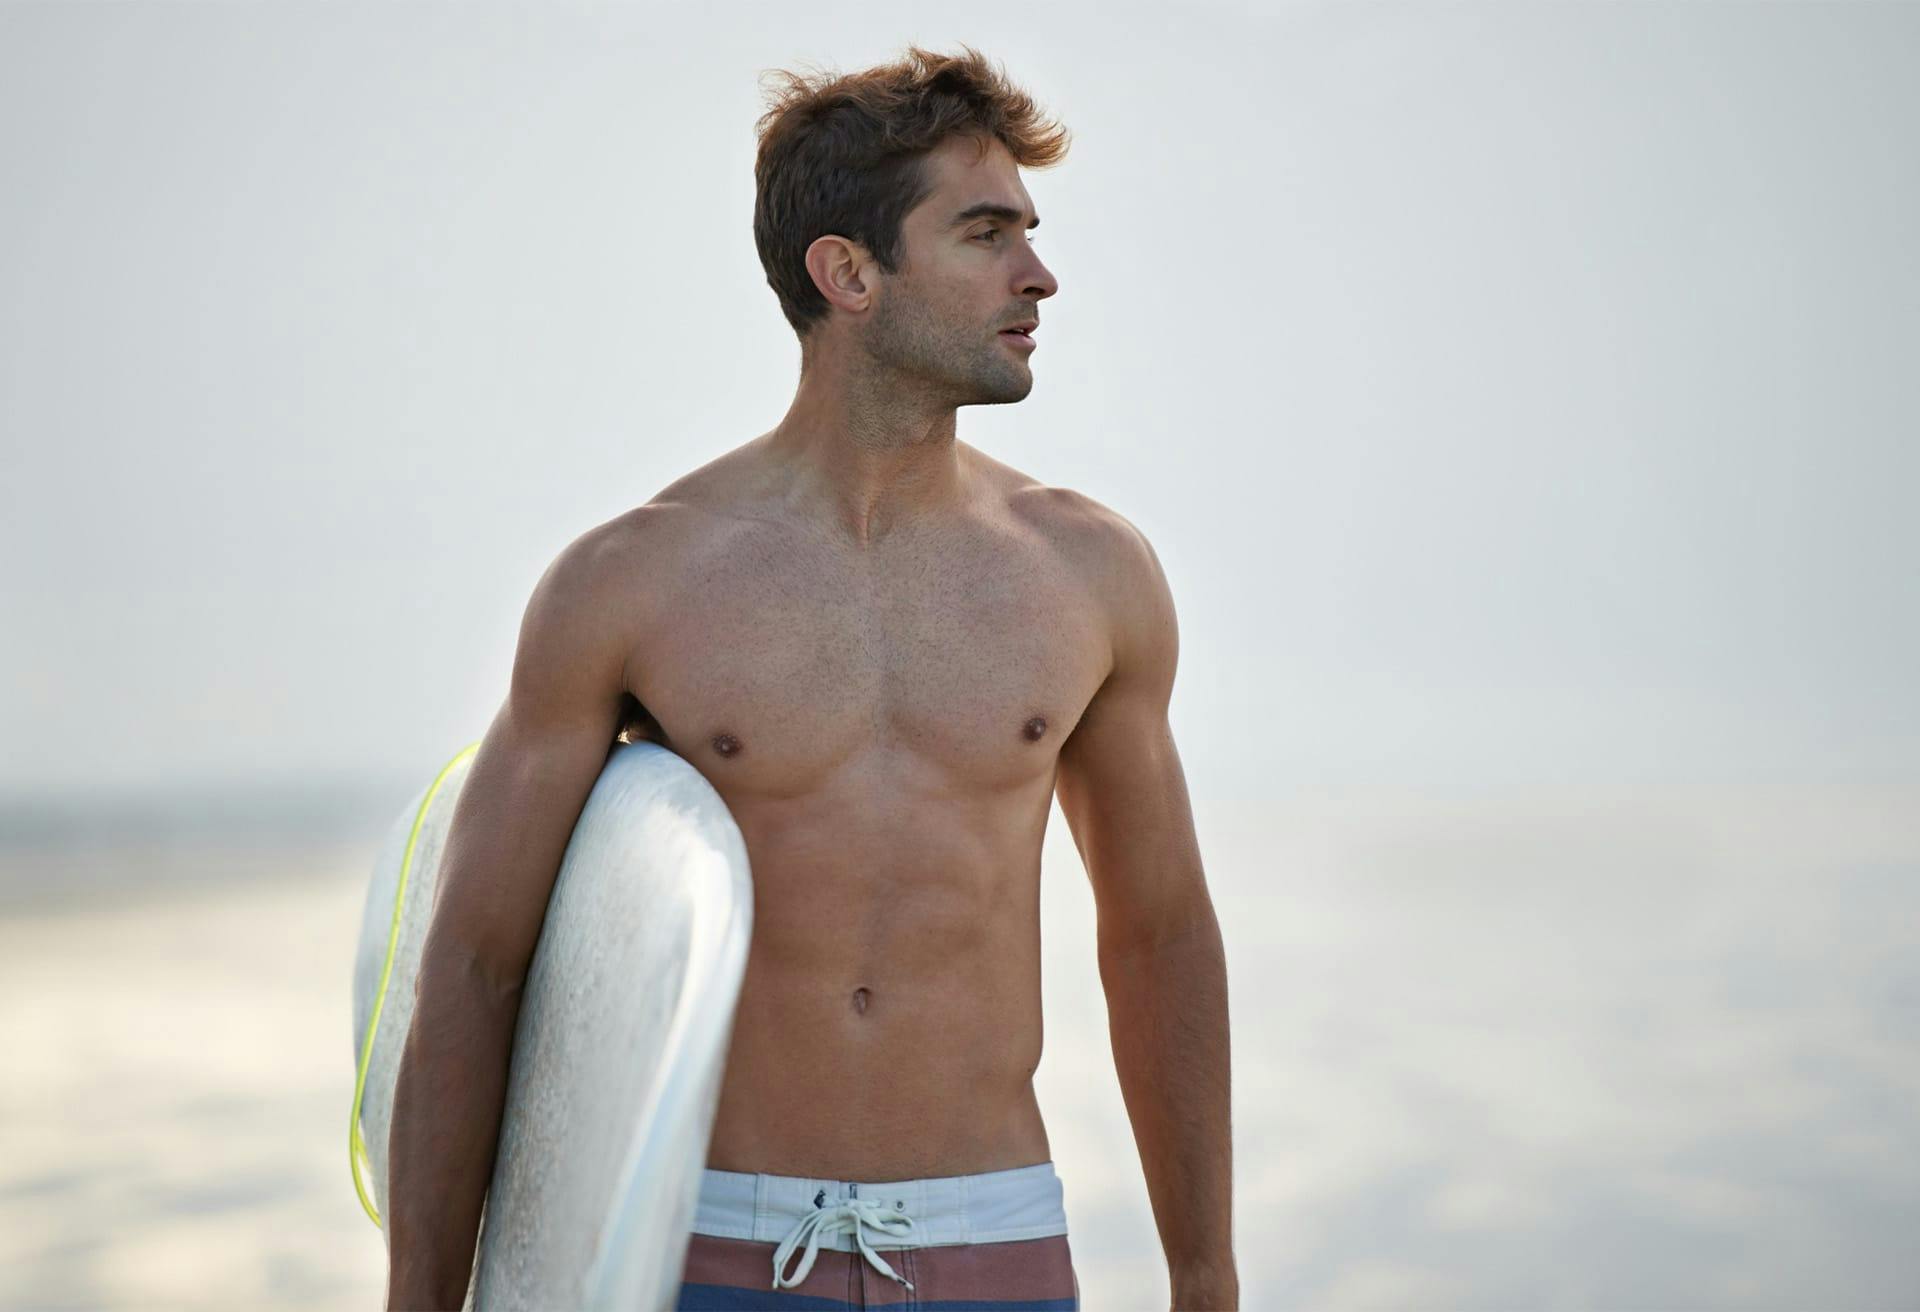 Man walking shirtless with surfboard on beach